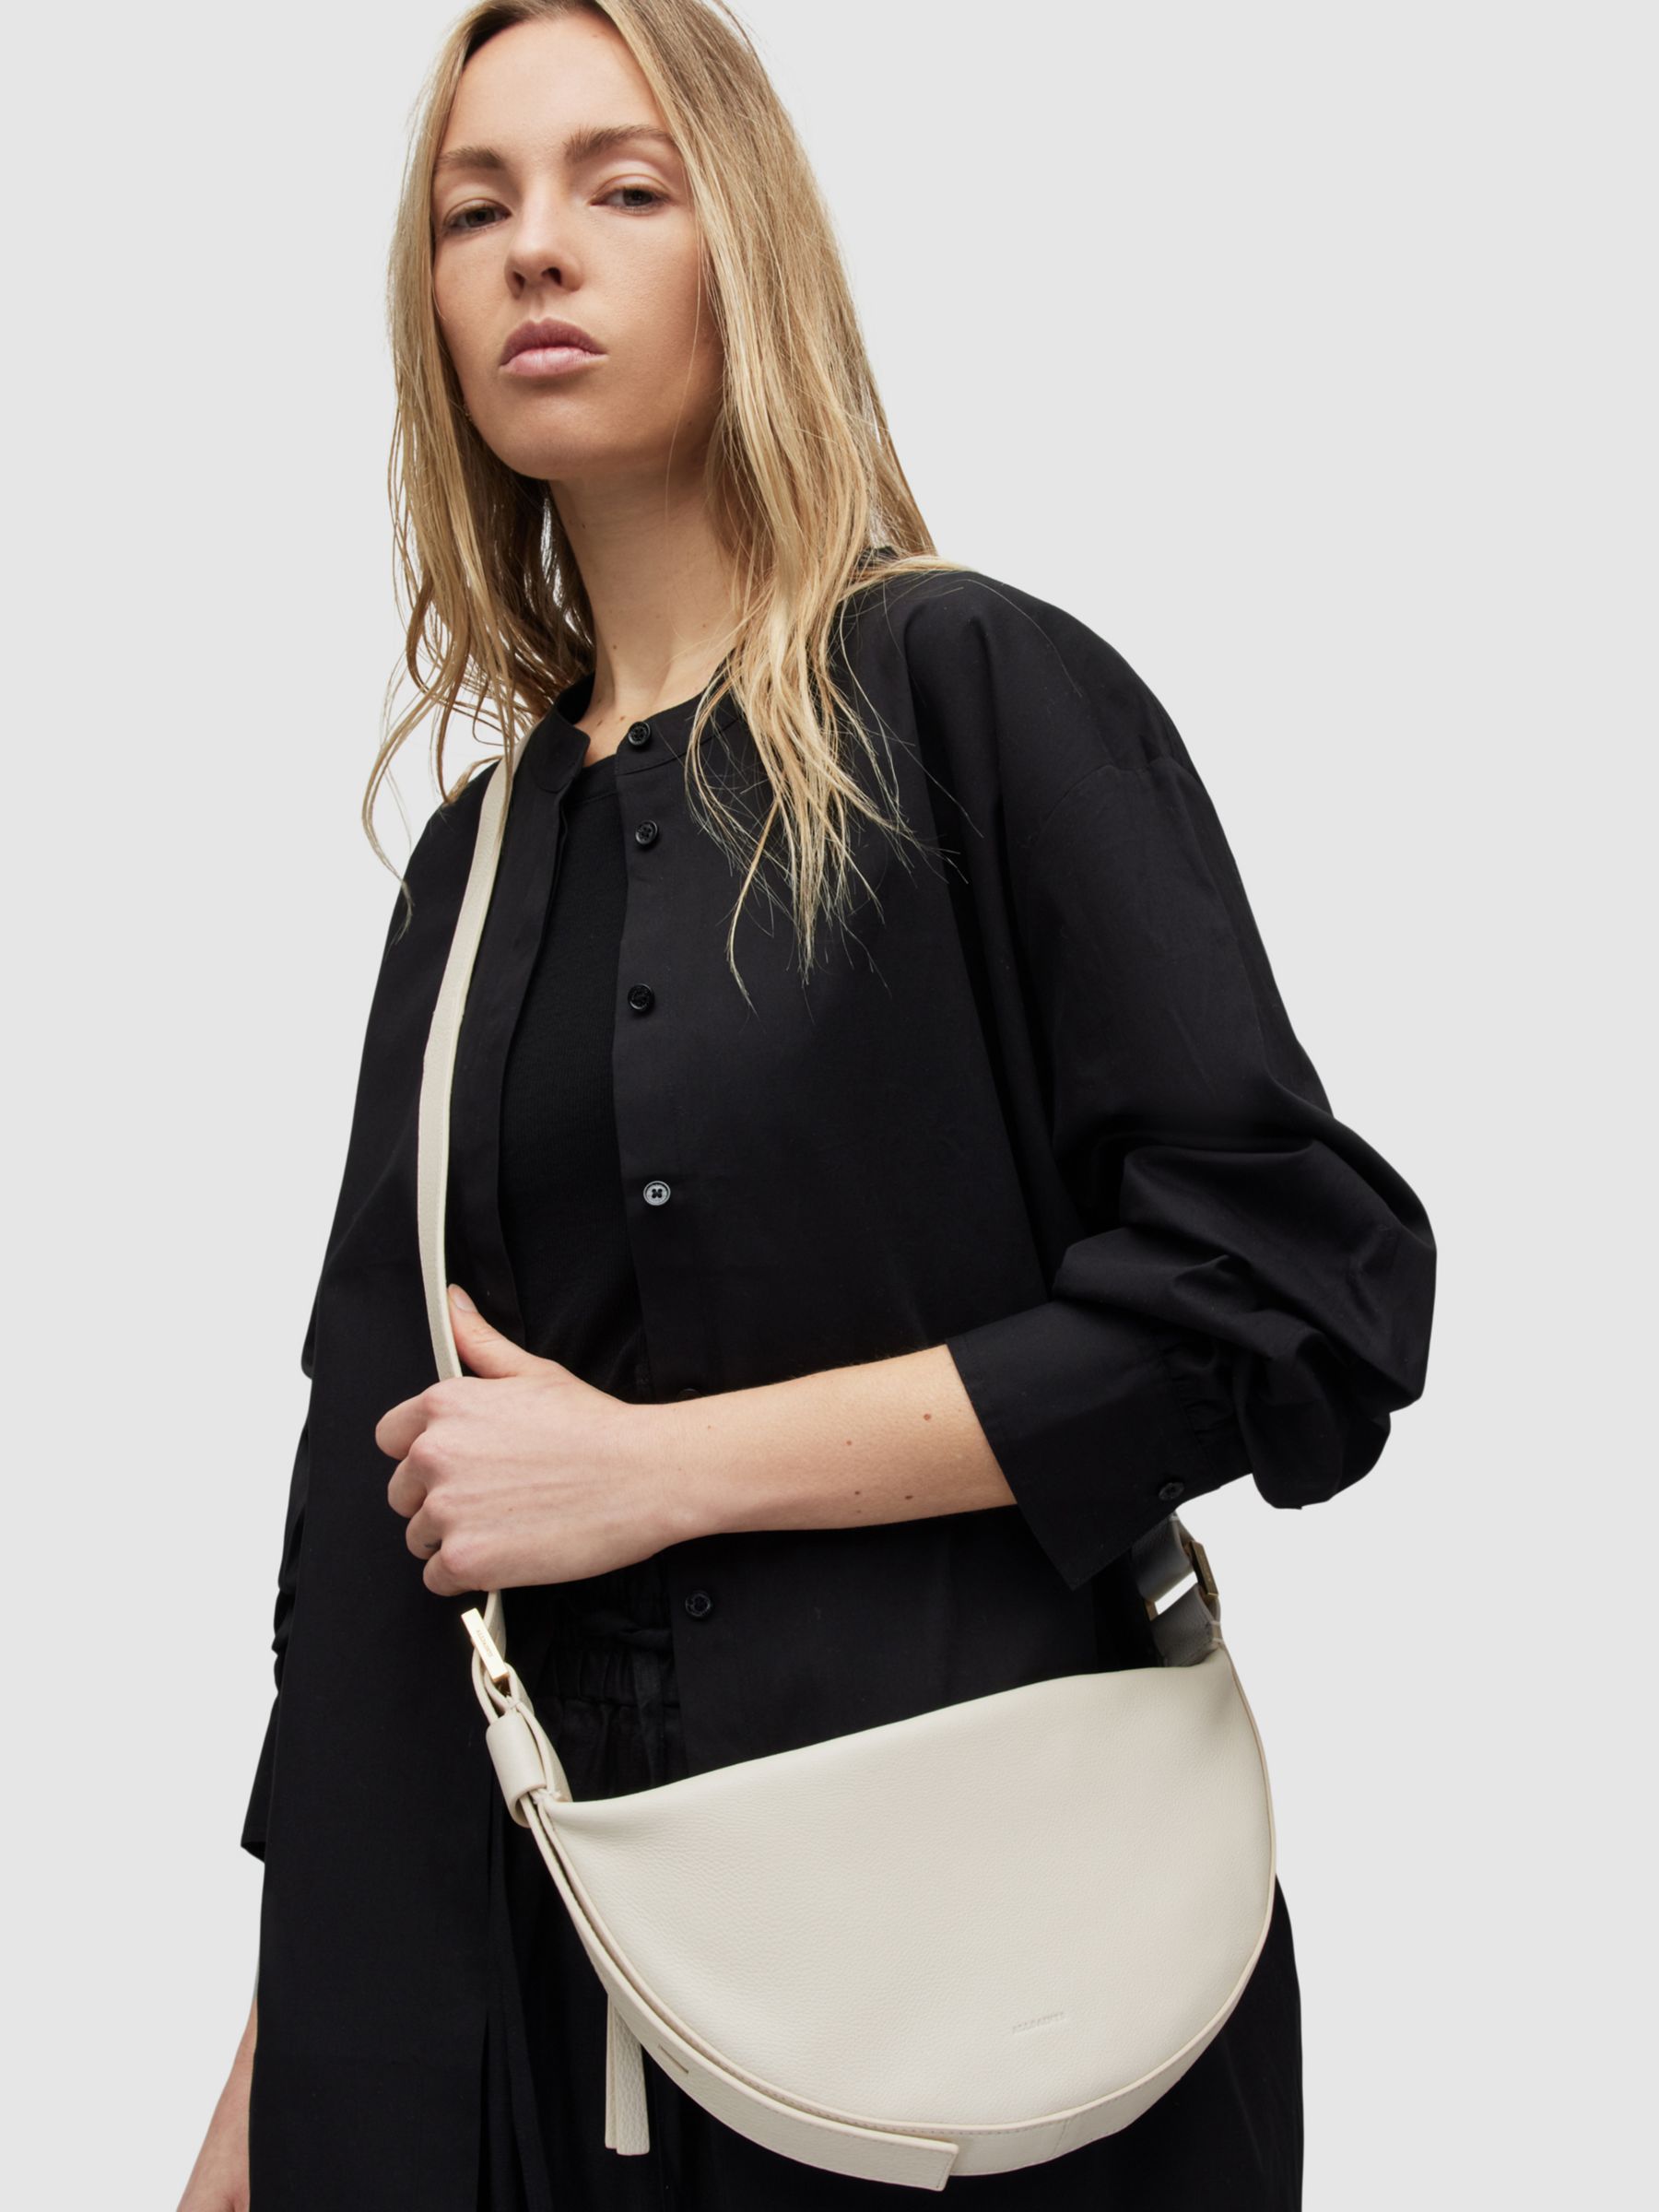 AllSaints Half Moon Leather Cross Body Bag, White at John Lewis & Partners